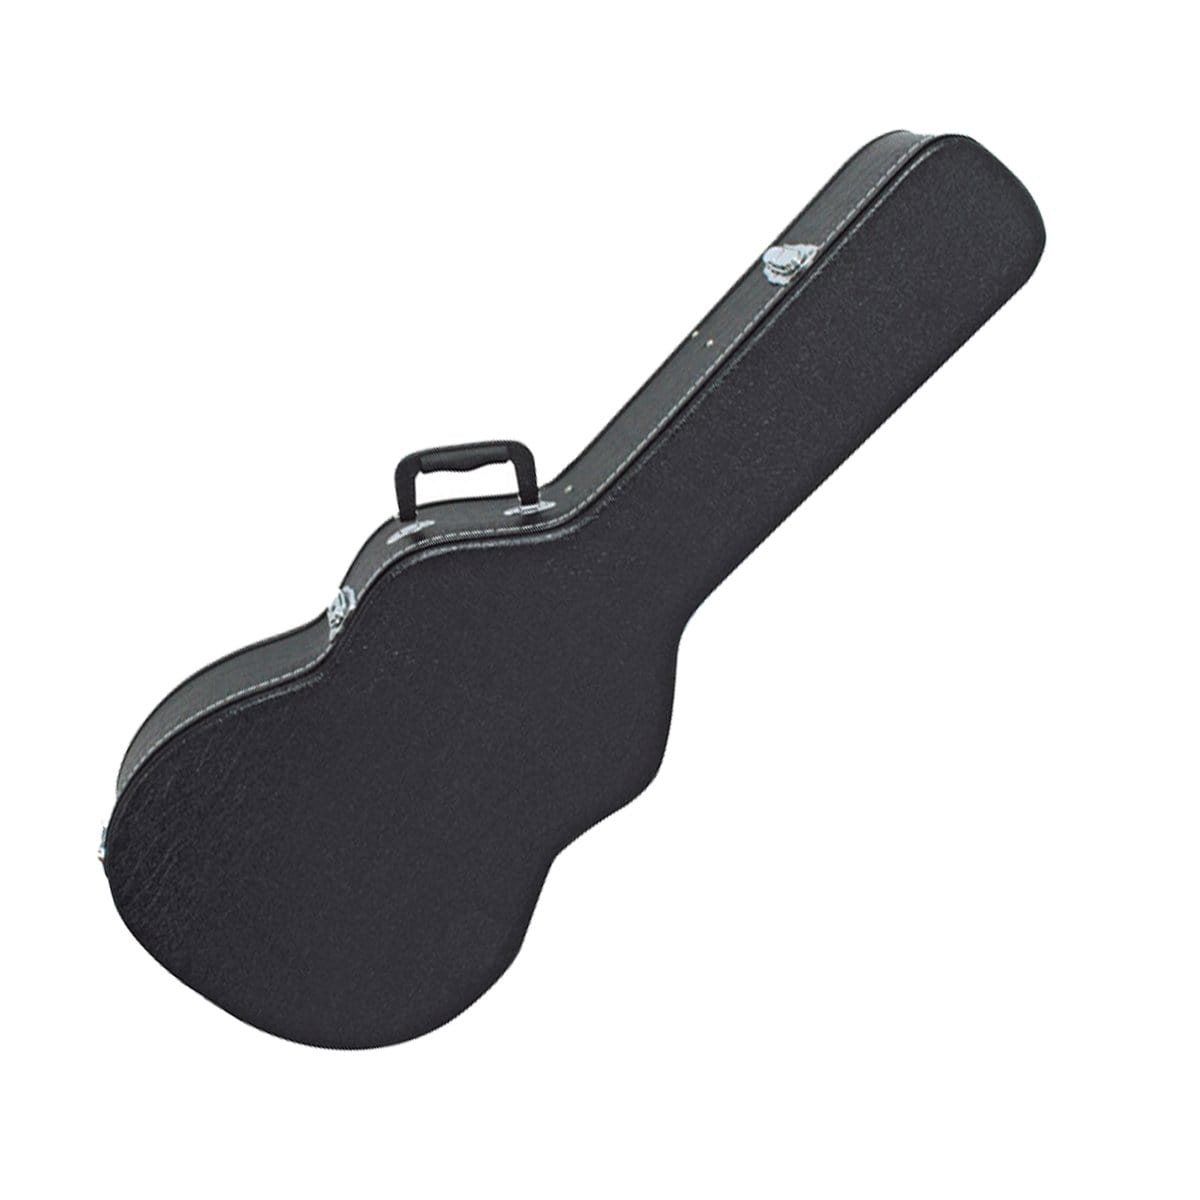 V-Case Guitar Accessories V-Case Classical Guitar Case Shaped HC1001 - Byron Music